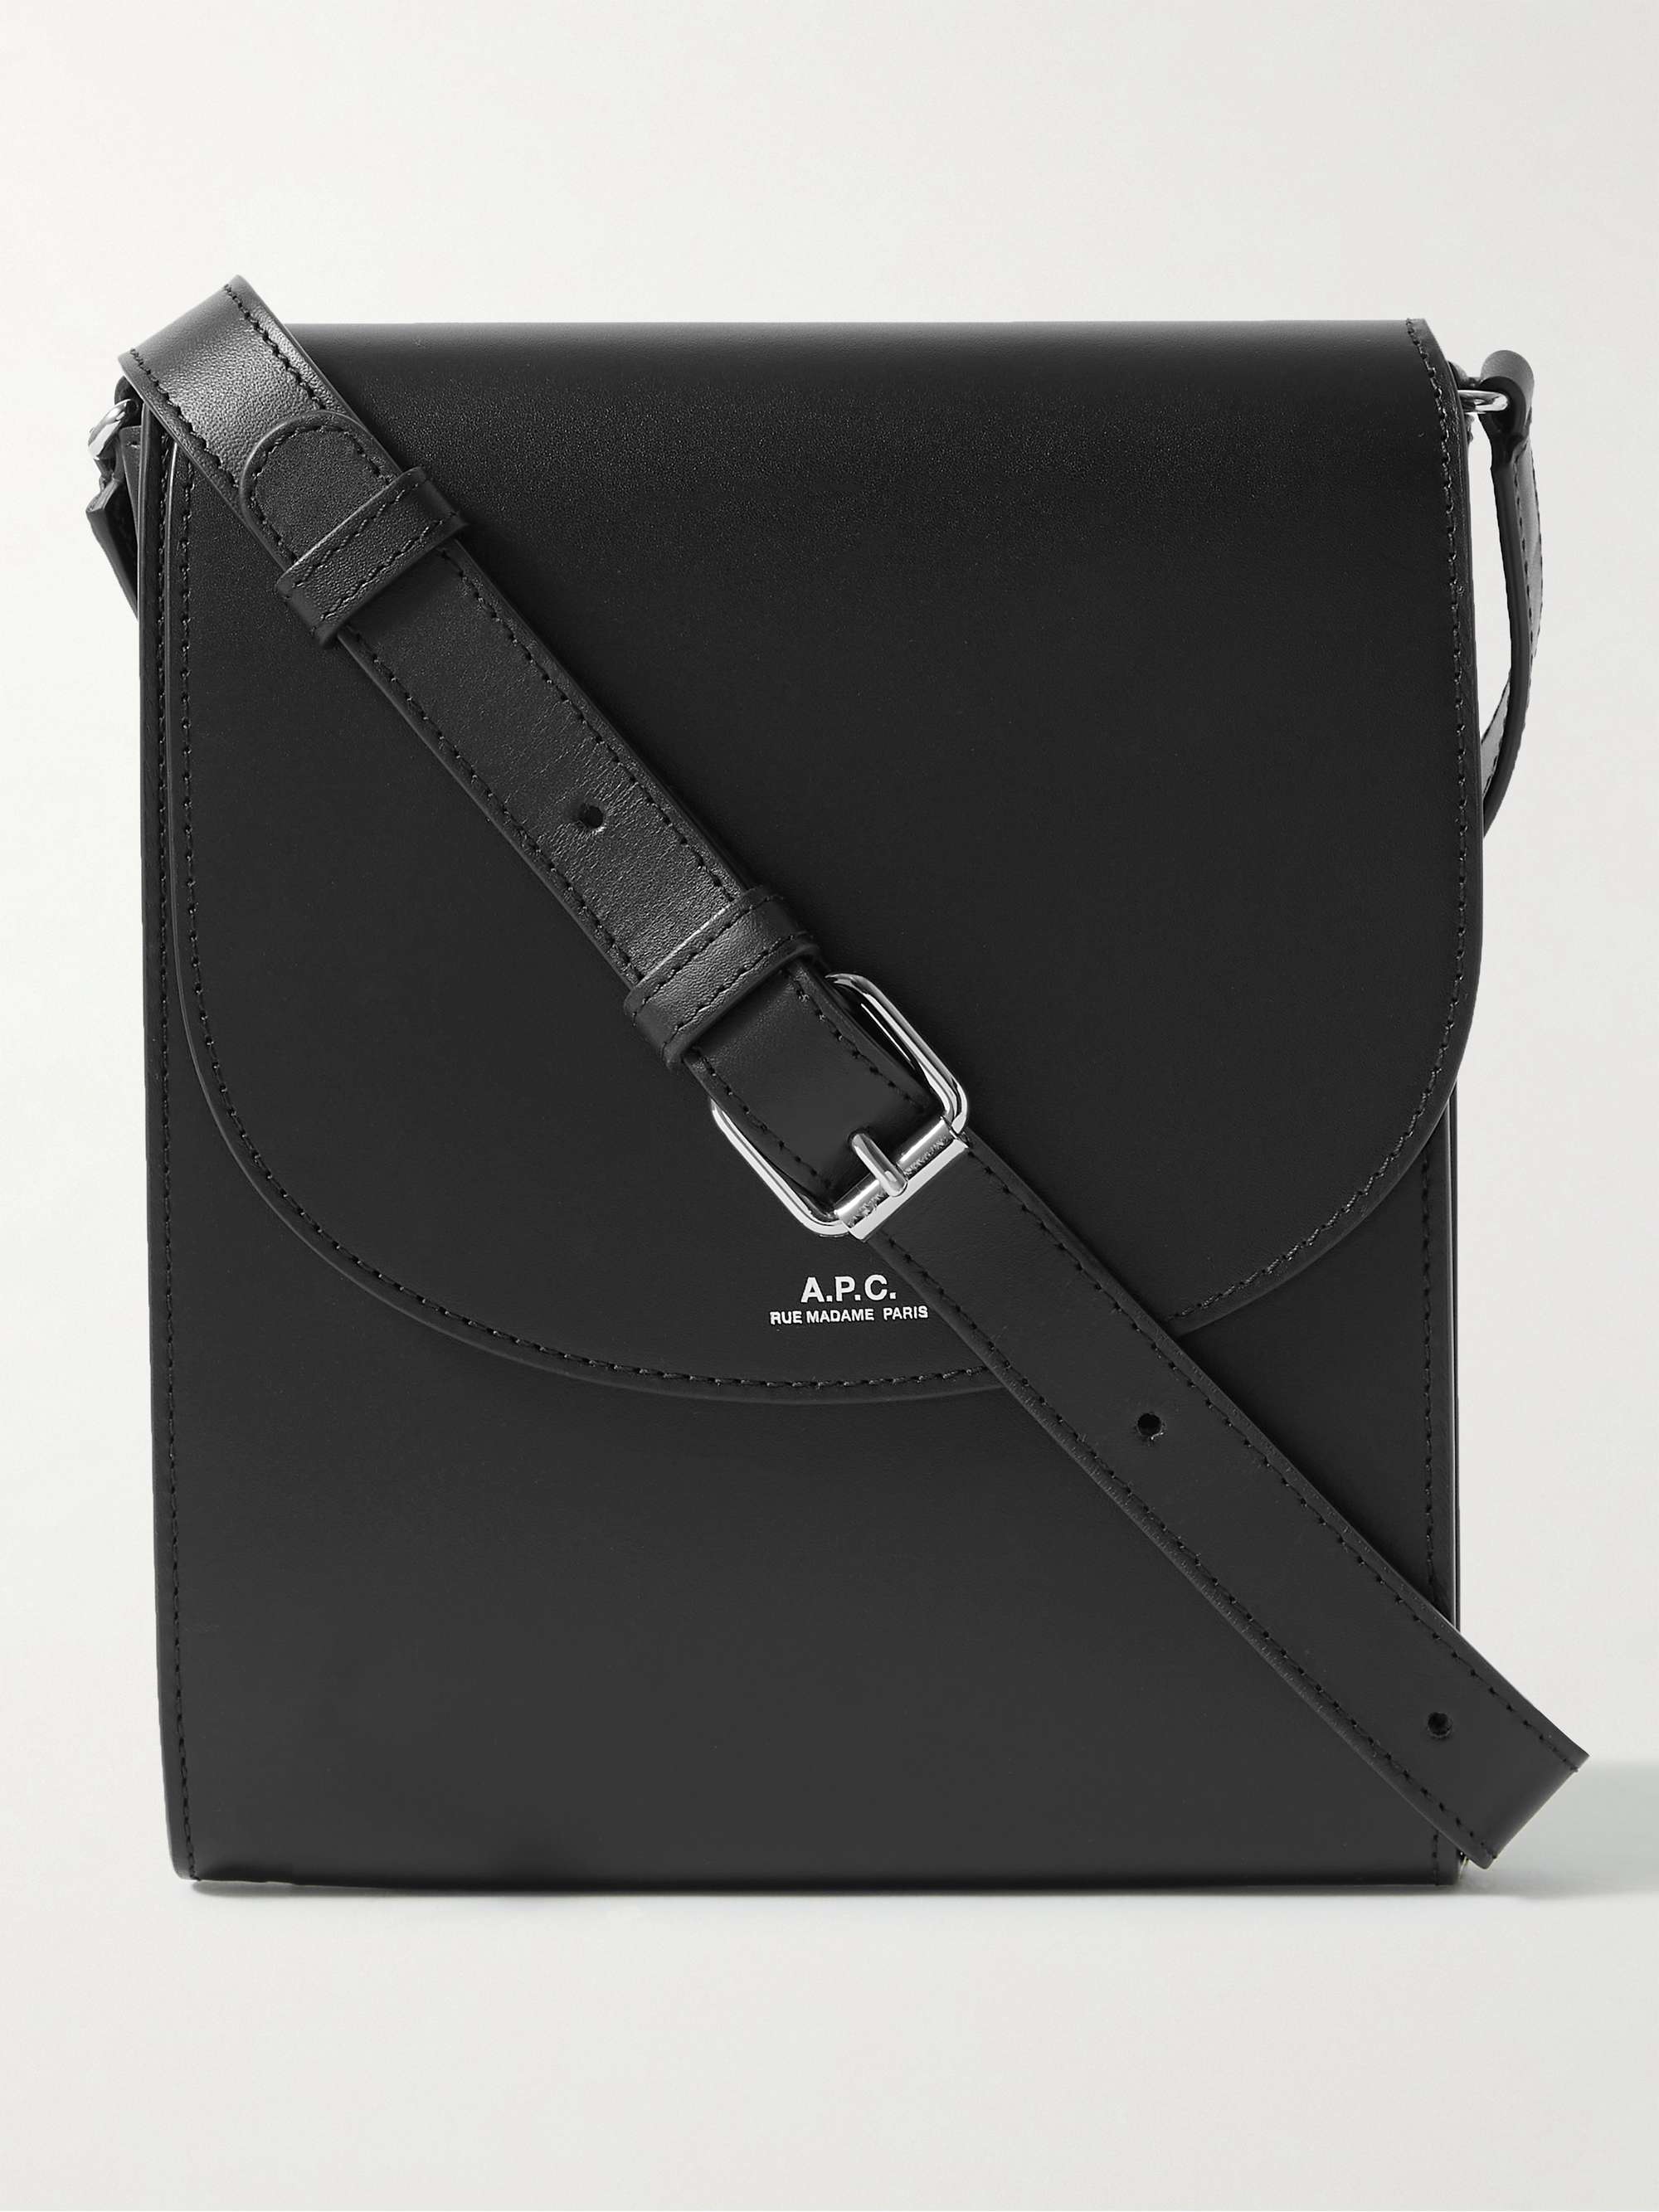 A.P.C. Leather Messenger Bag